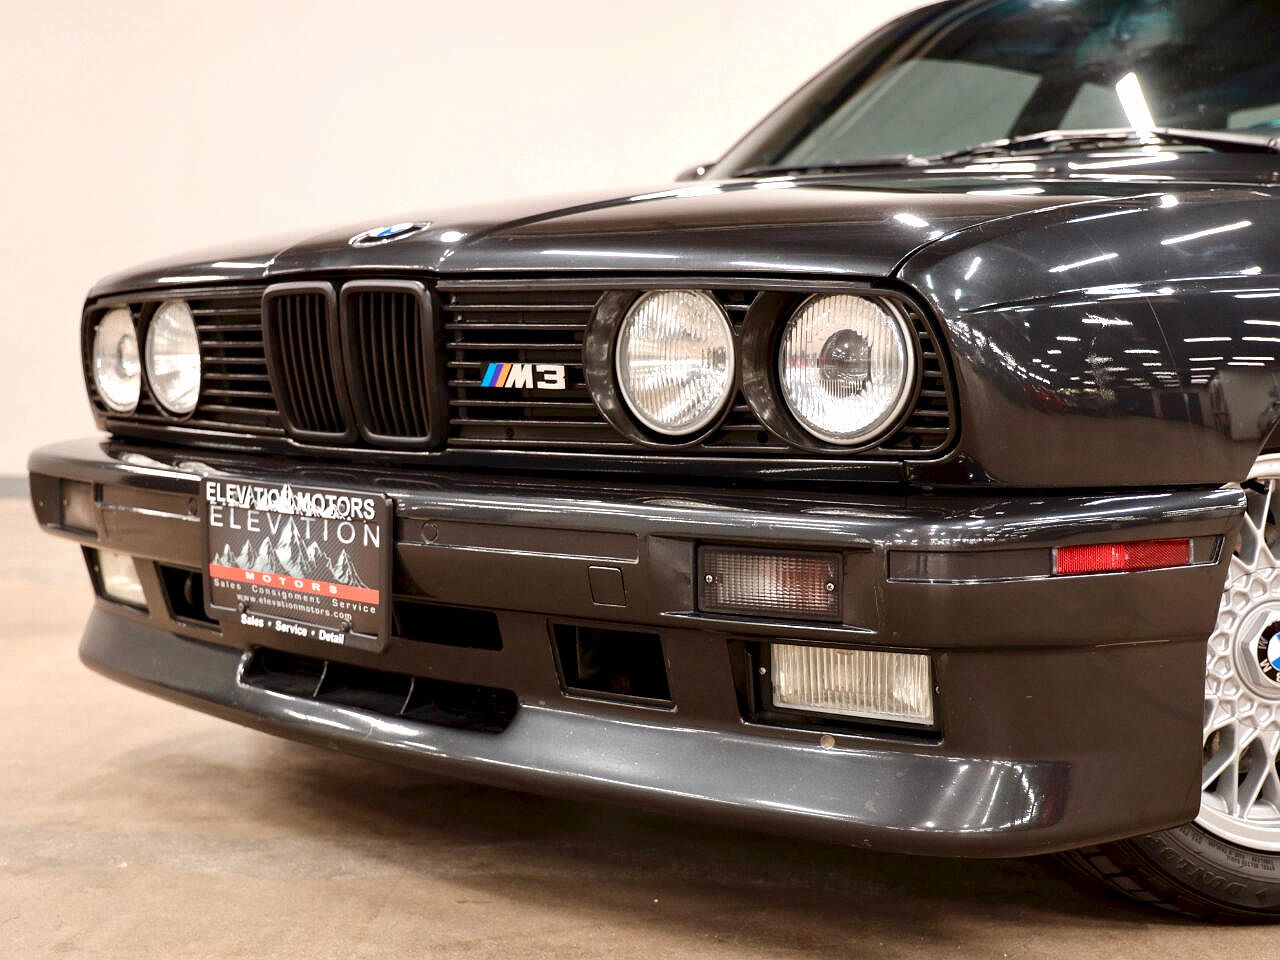 1988 BMW M3 null image 10